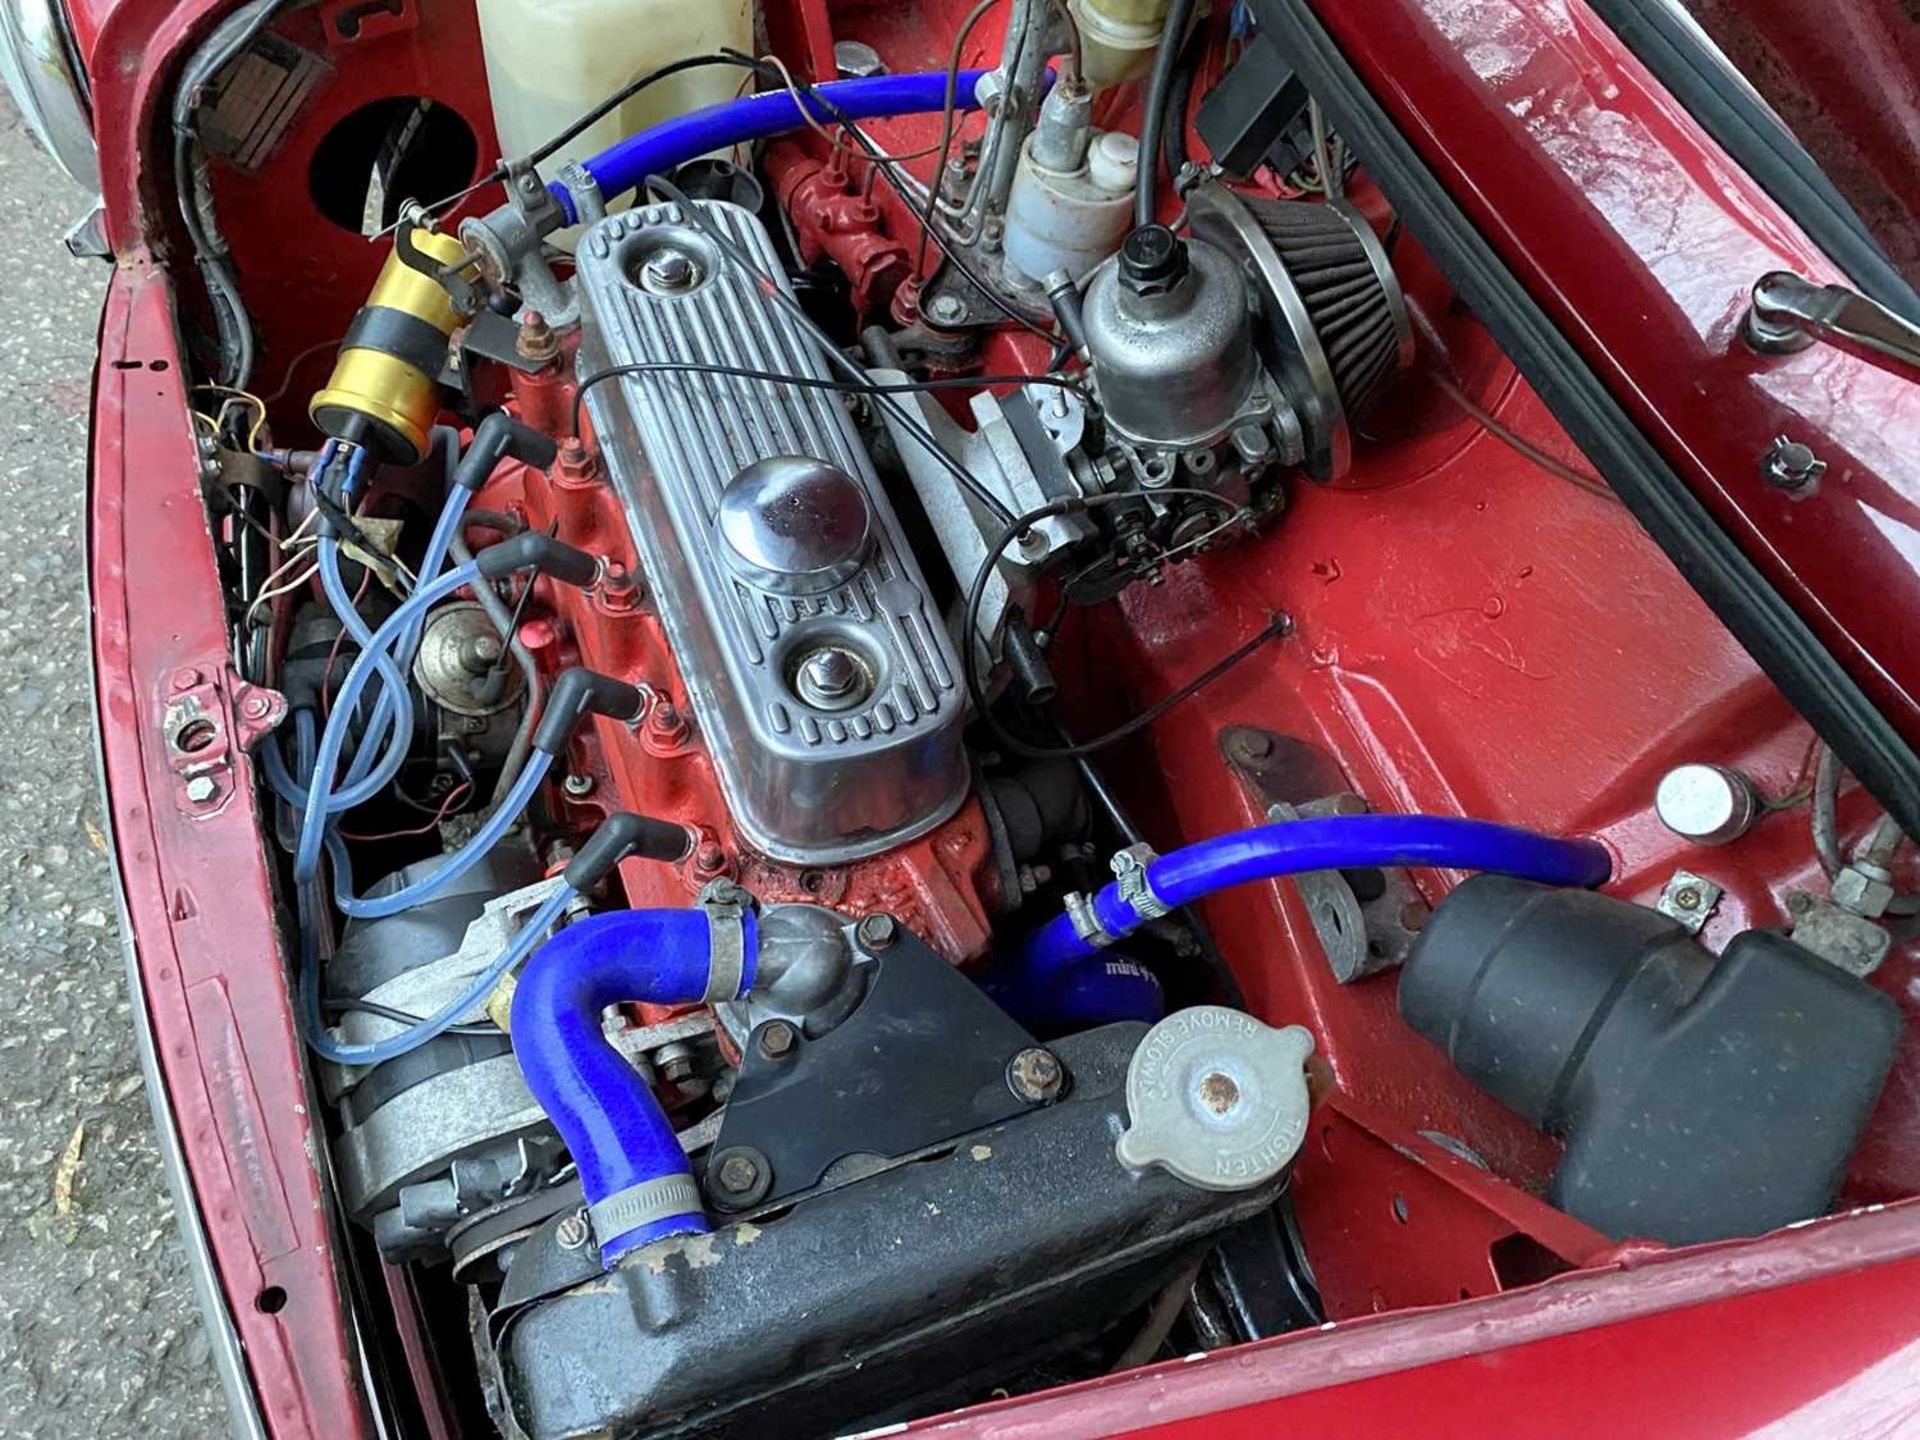 1984 Austin Mini 1330cc engine - Image 49 of 82